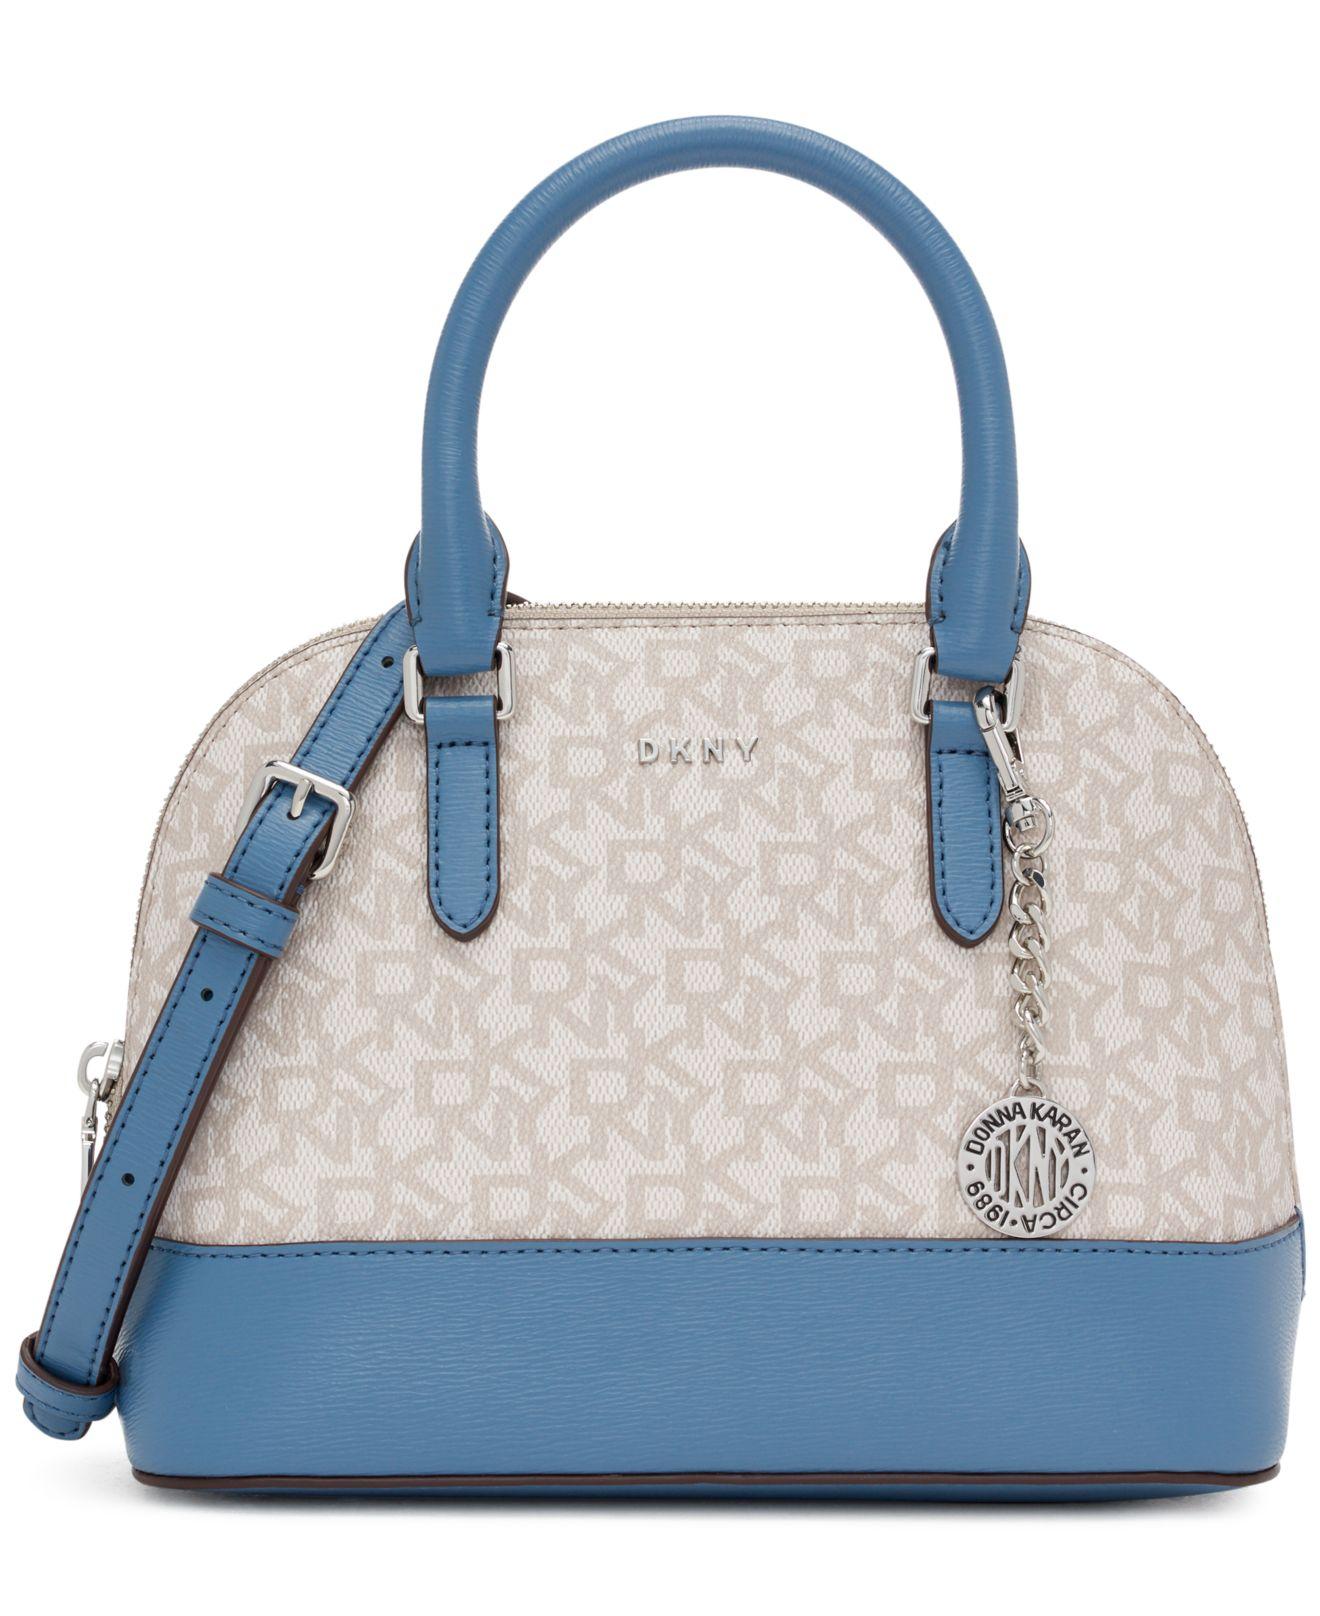 Donna Karan DKNY Signature Blue Gray Canvas Leather Chain Shoulder bag  Handbag - swapshop.gr